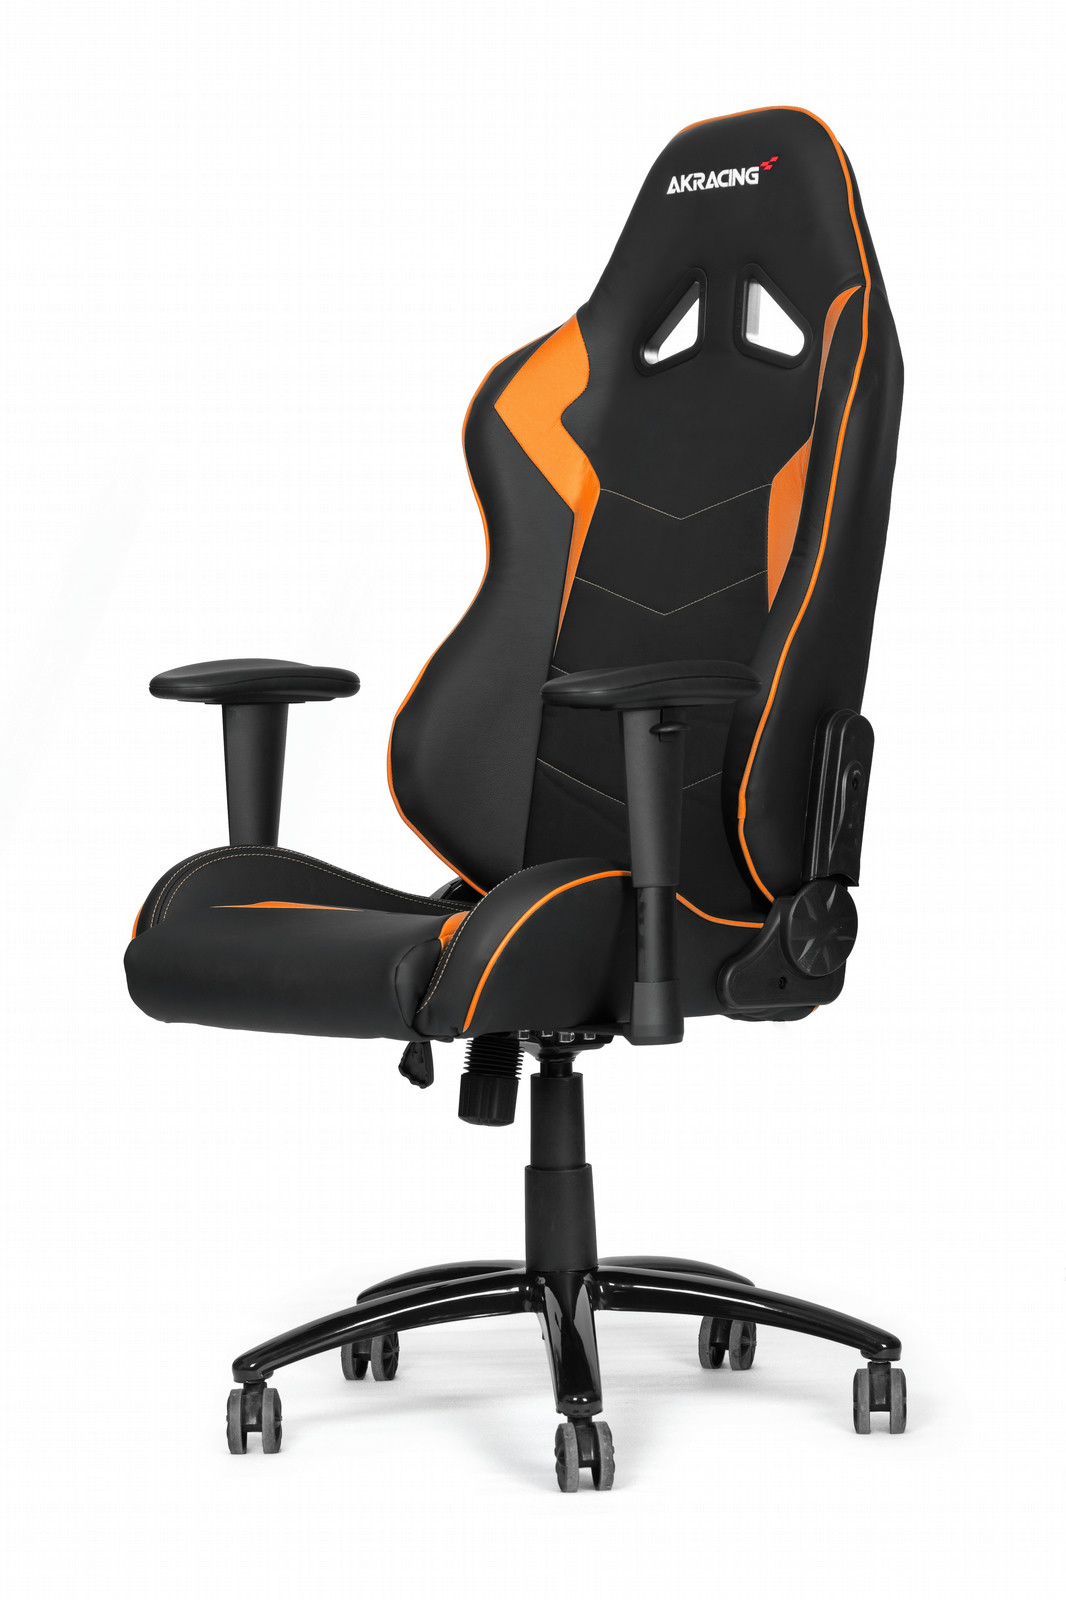 Blue Razer x dxracer gaming chair price in bd with Sporty Design